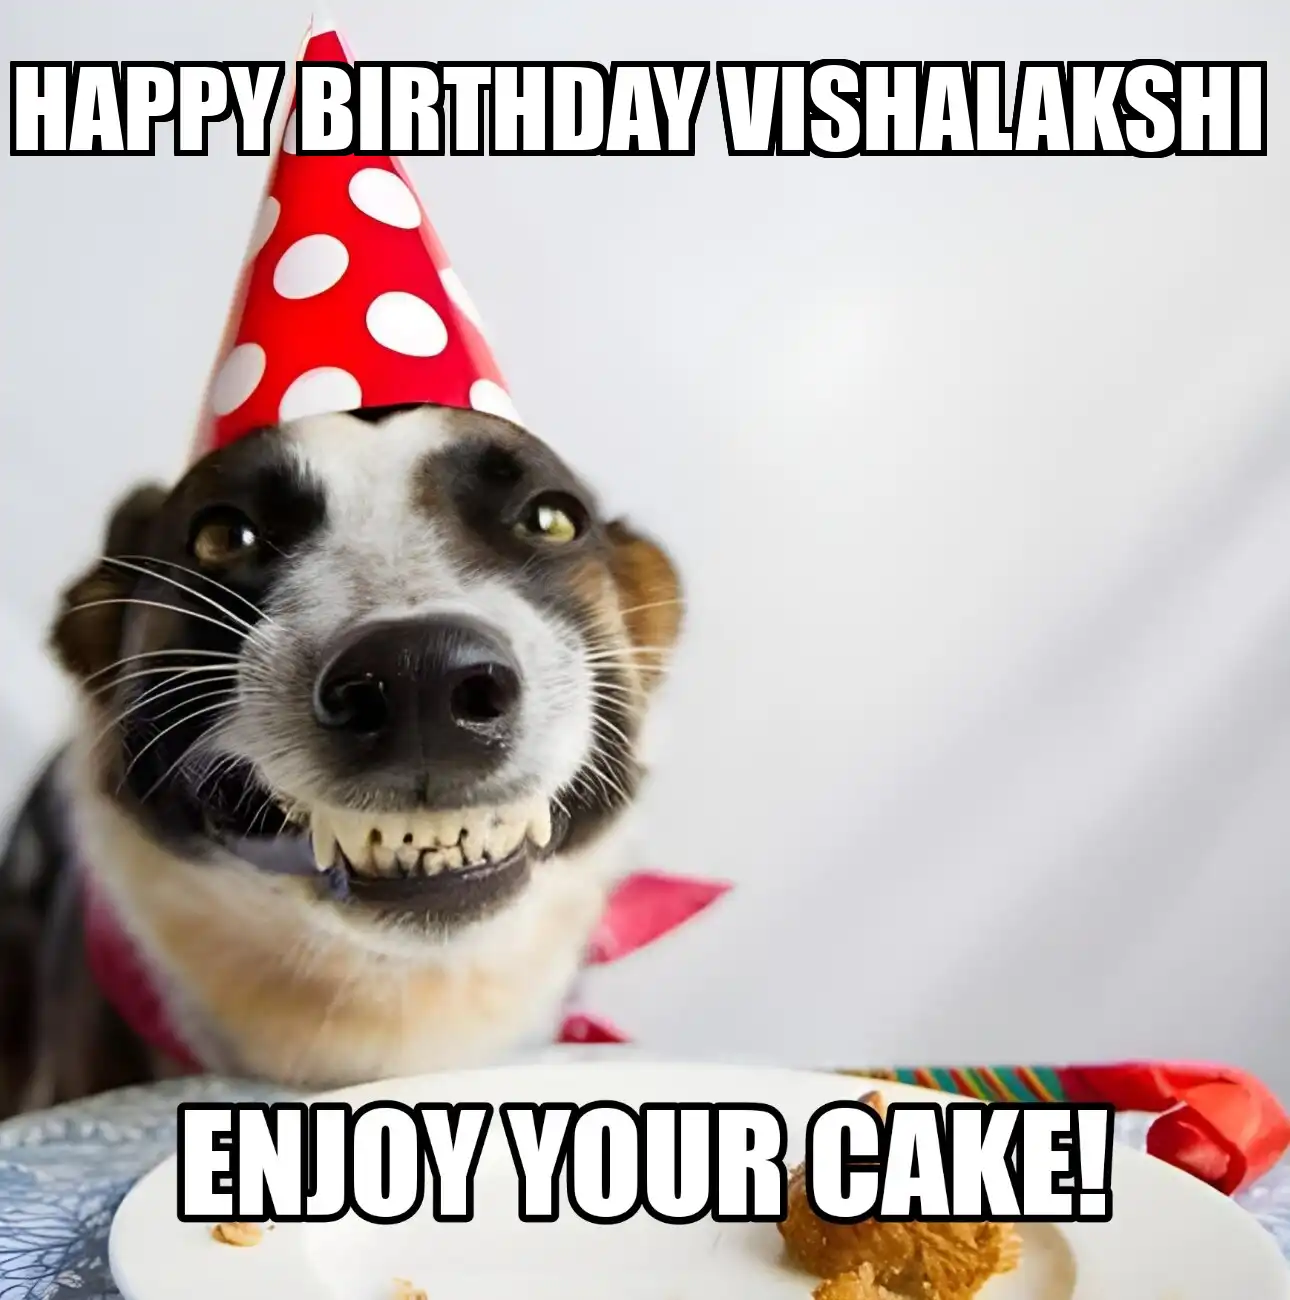 Happy Birthday Vishalakshi Enjoy Your Cake Dog Meme